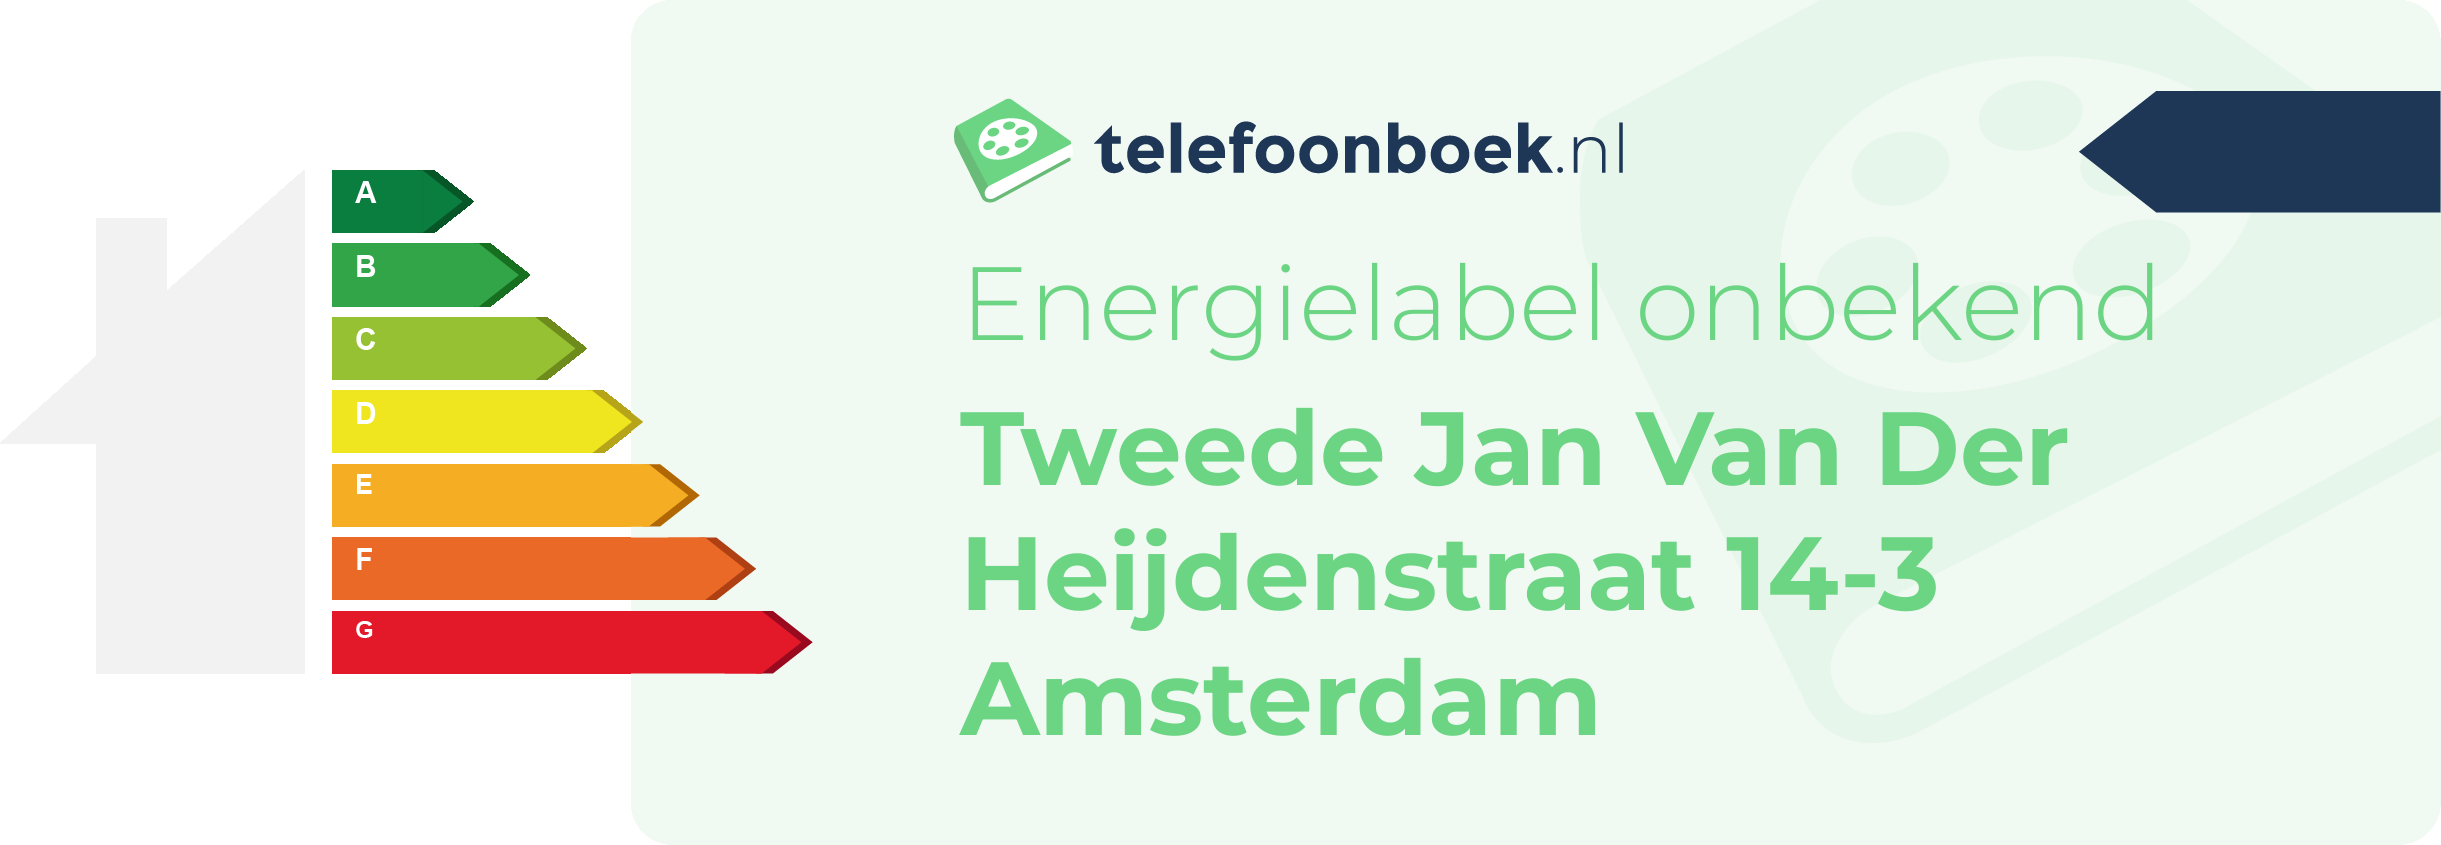 Energielabel Tweede Jan Van Der Heijdenstraat 14-3 Amsterdam